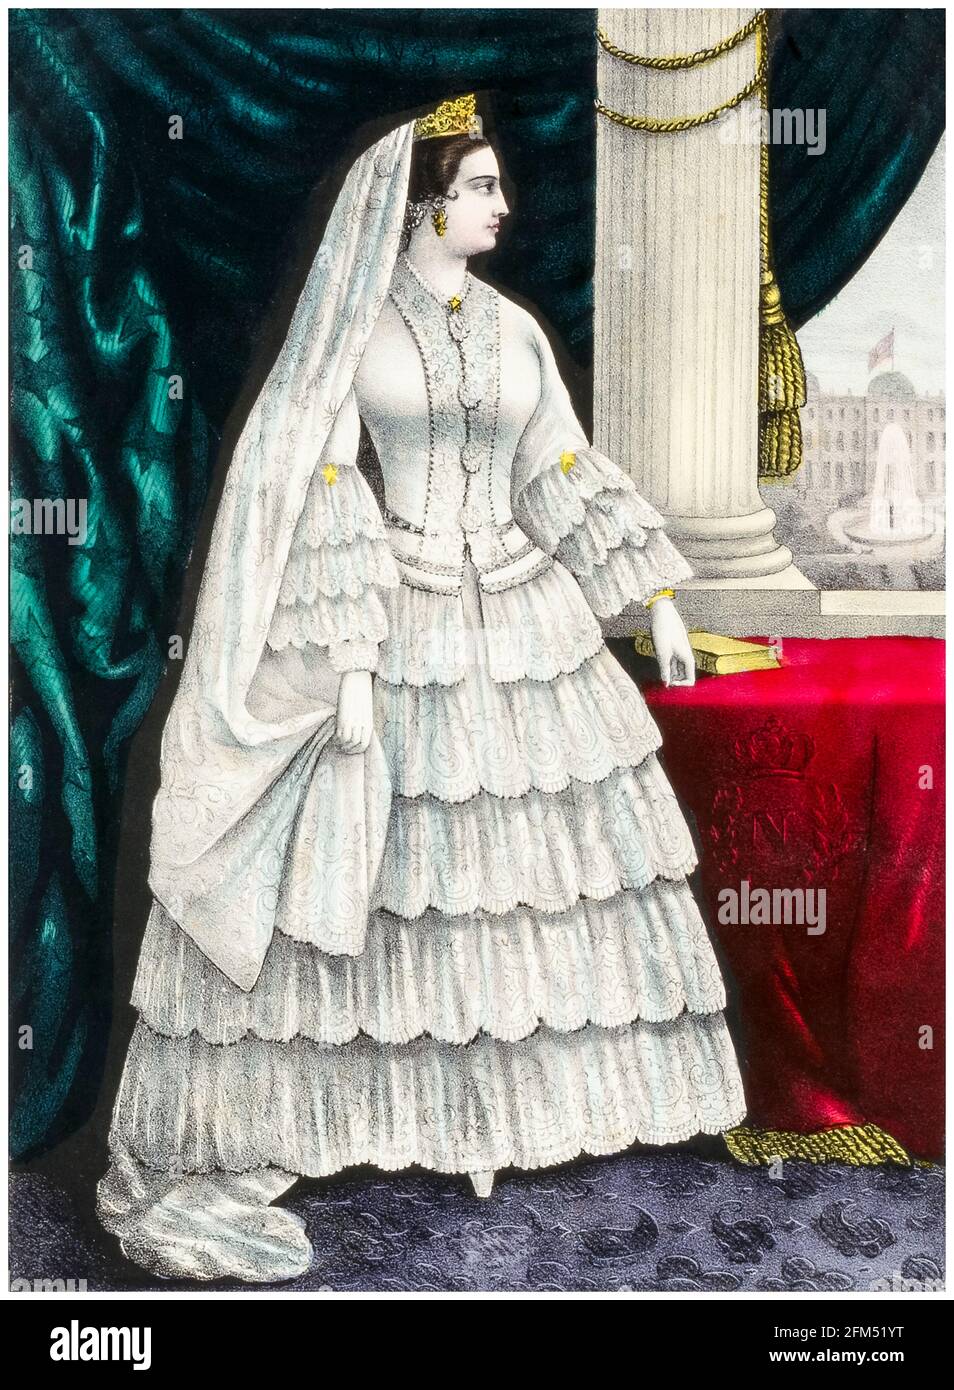 Eugenie De Montijo, Empress Consort by Print Collector